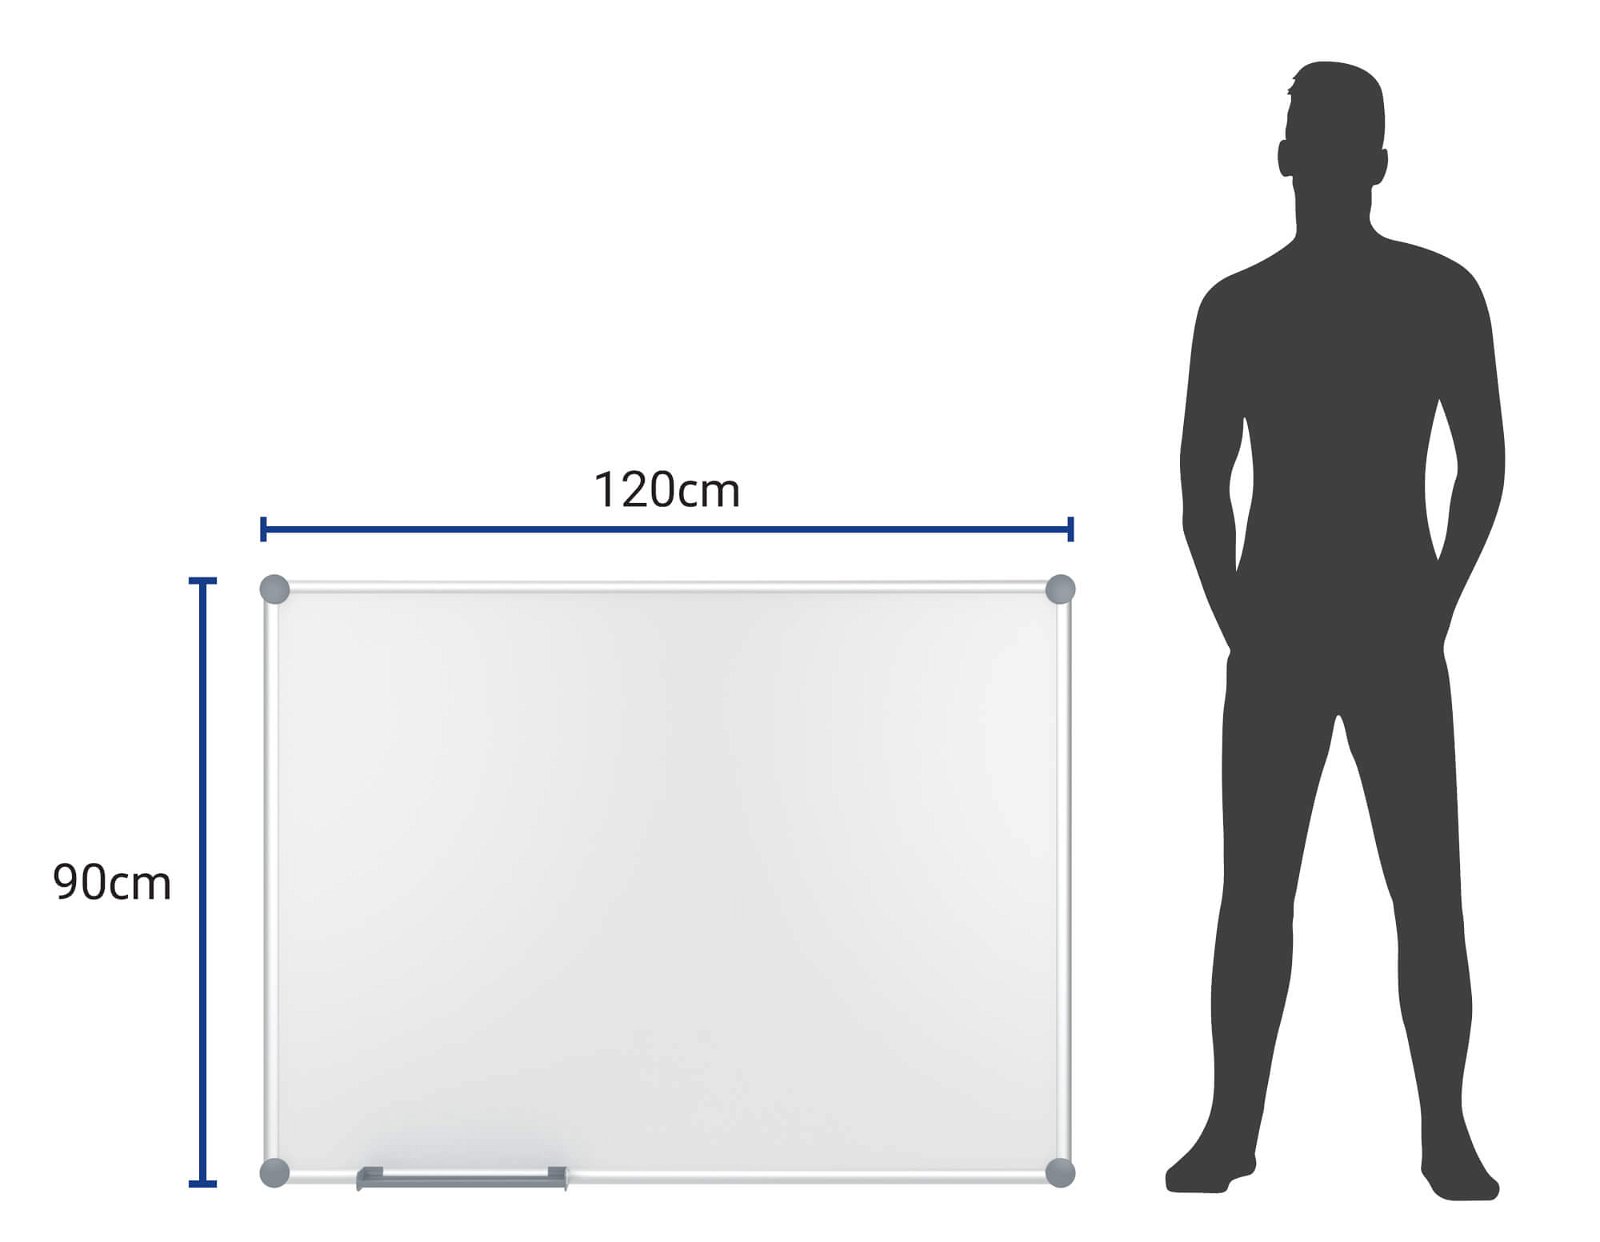 Whiteboard 2000 MAULpro, 90x120 cm, grau